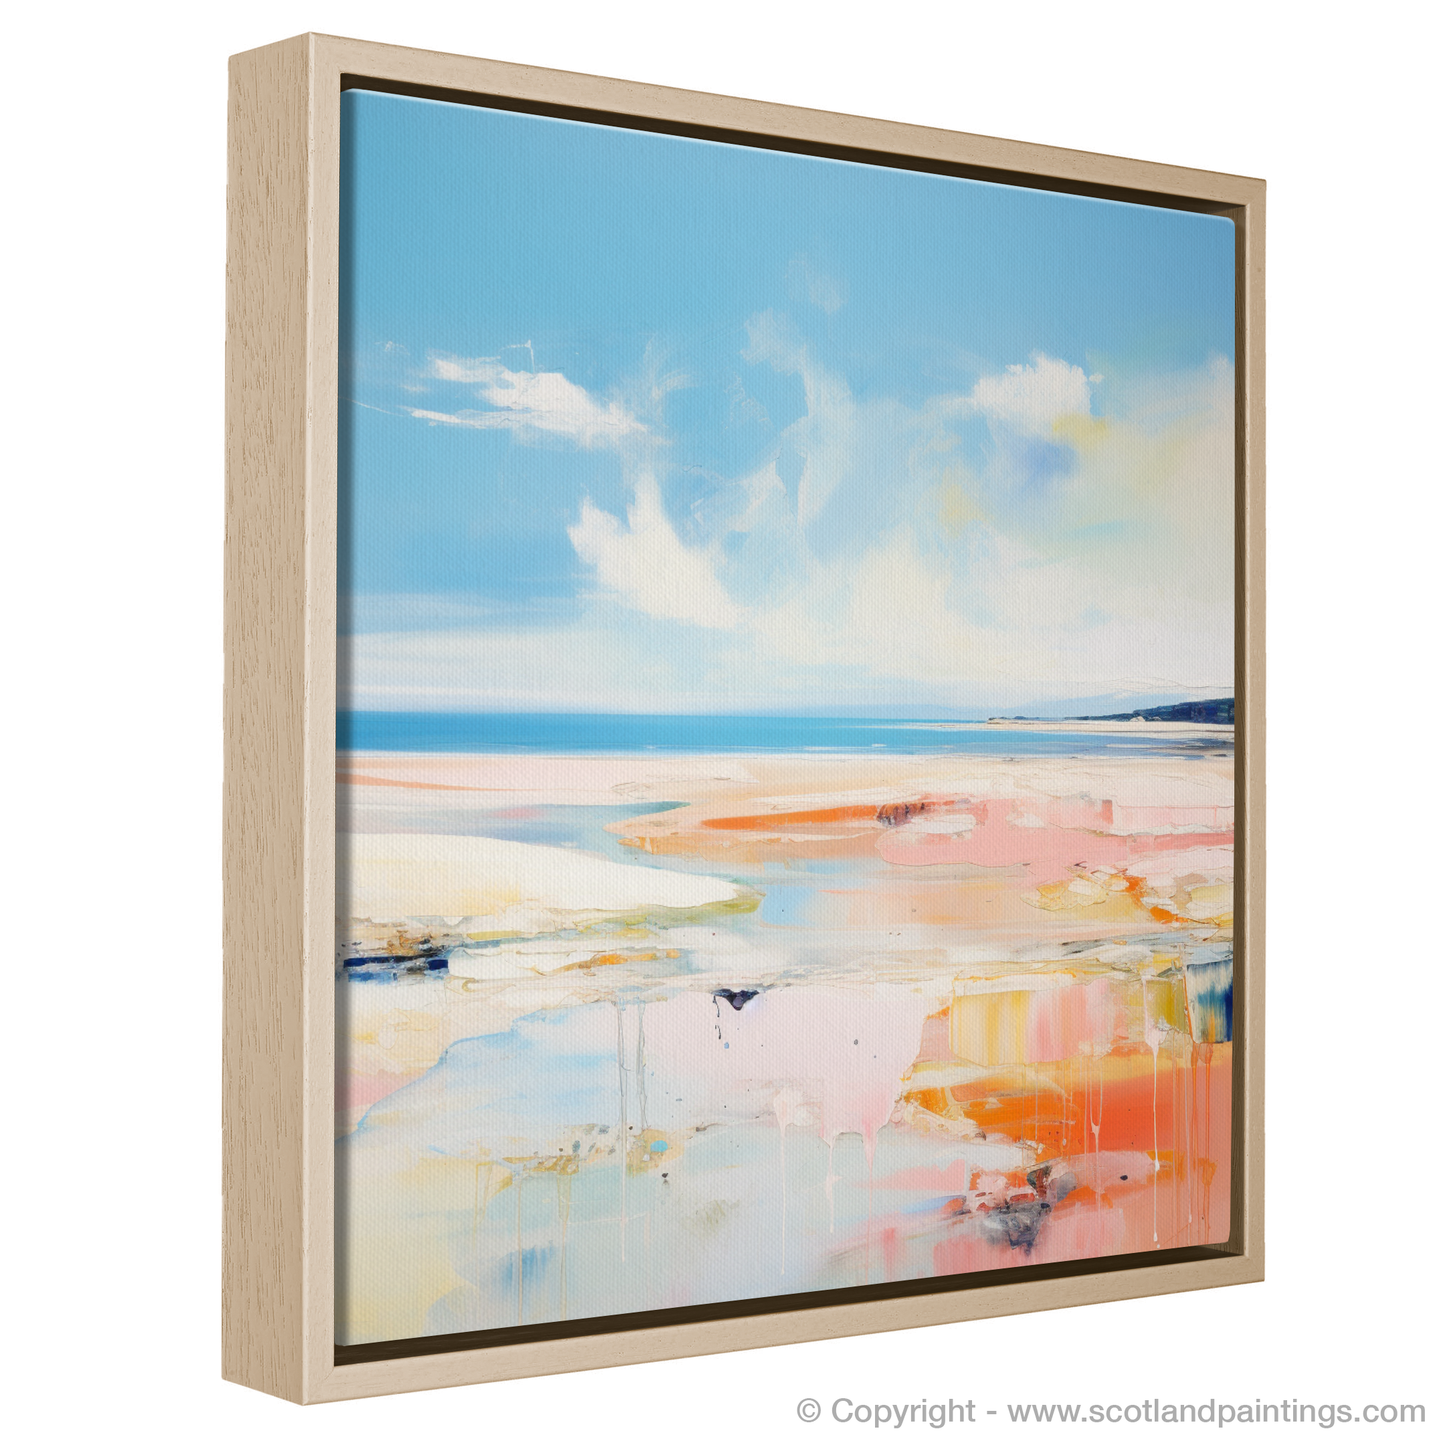 Painting and Art Print of Nairn Beach, Nairn in summer entitled "Summer Serenade at Nairn Beach".